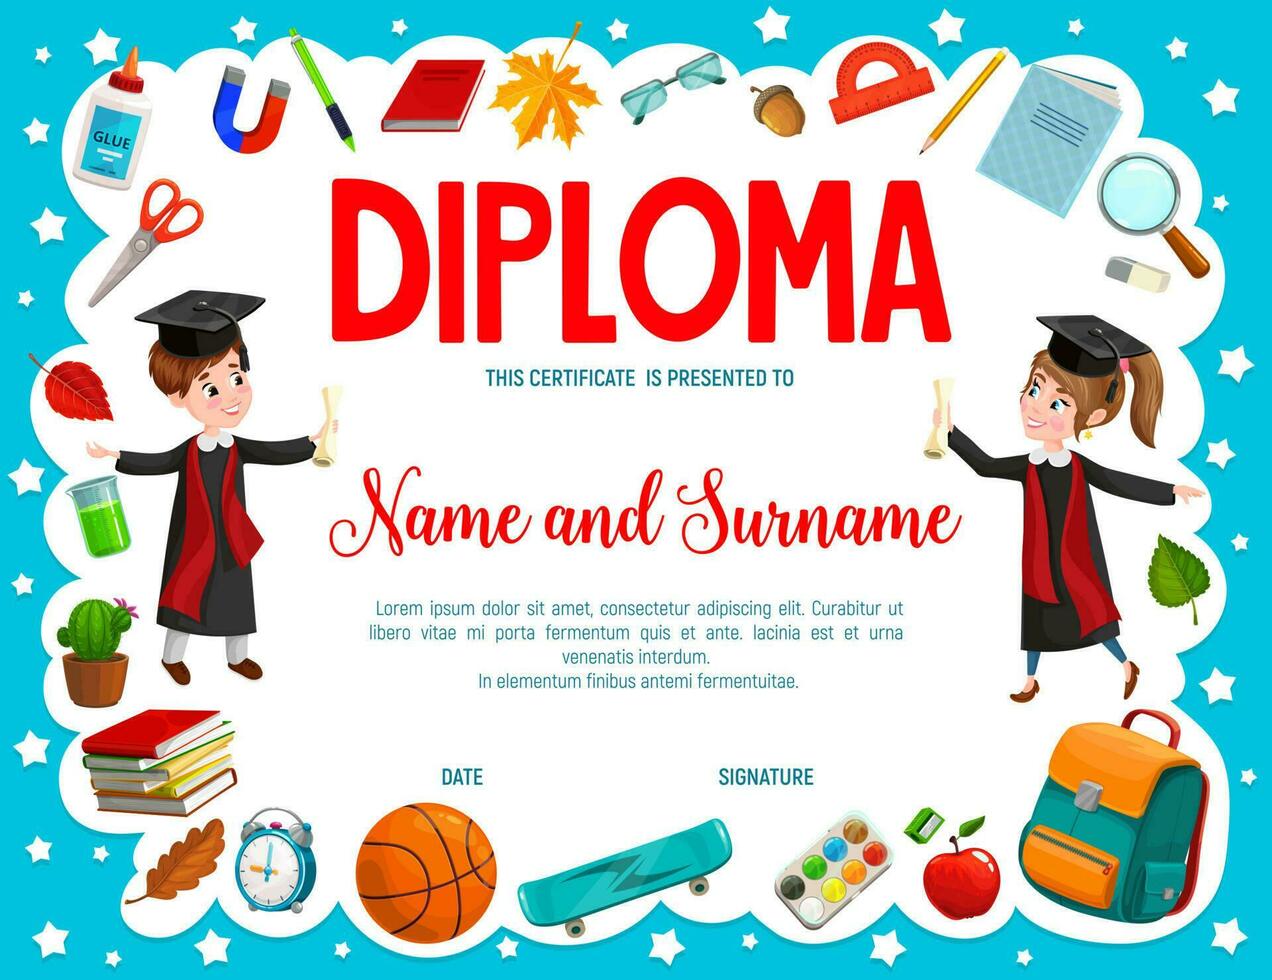 educación diploma con dibujos animados chico y niña alumnos vector